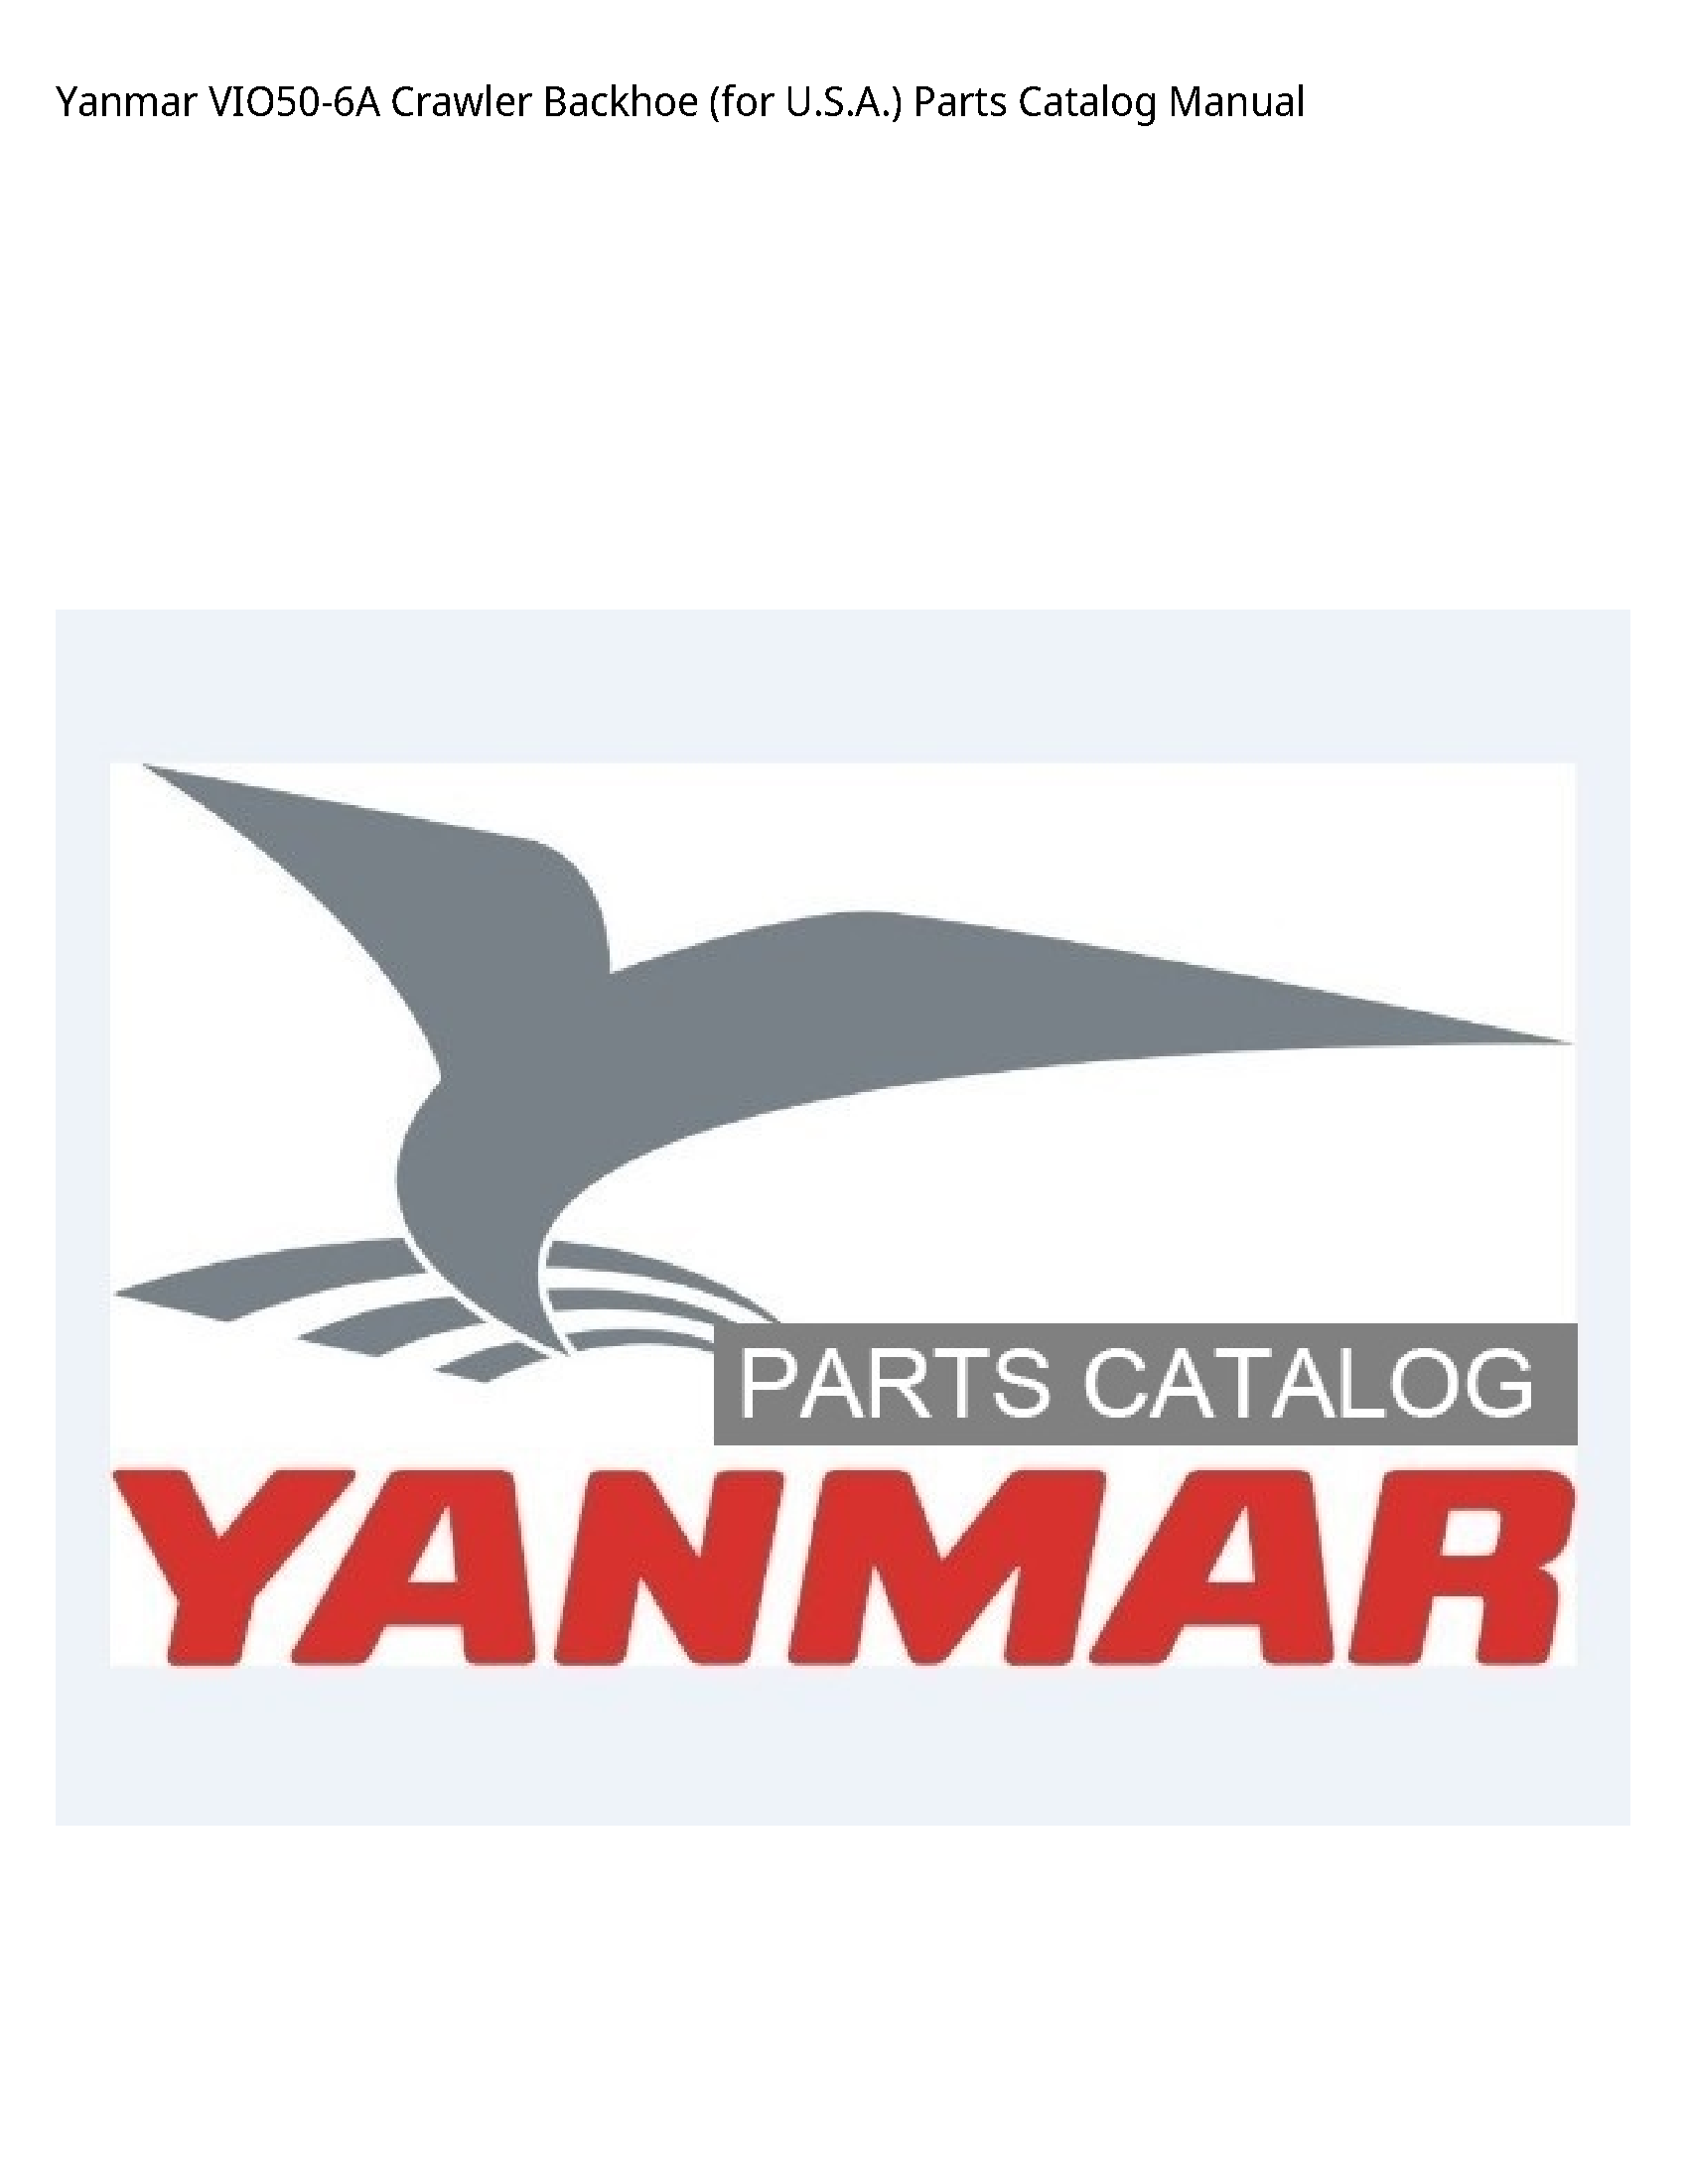 Yanmar VIO50-6A Crawler Backhoe (for U.S.A.) Parts Catalog manual